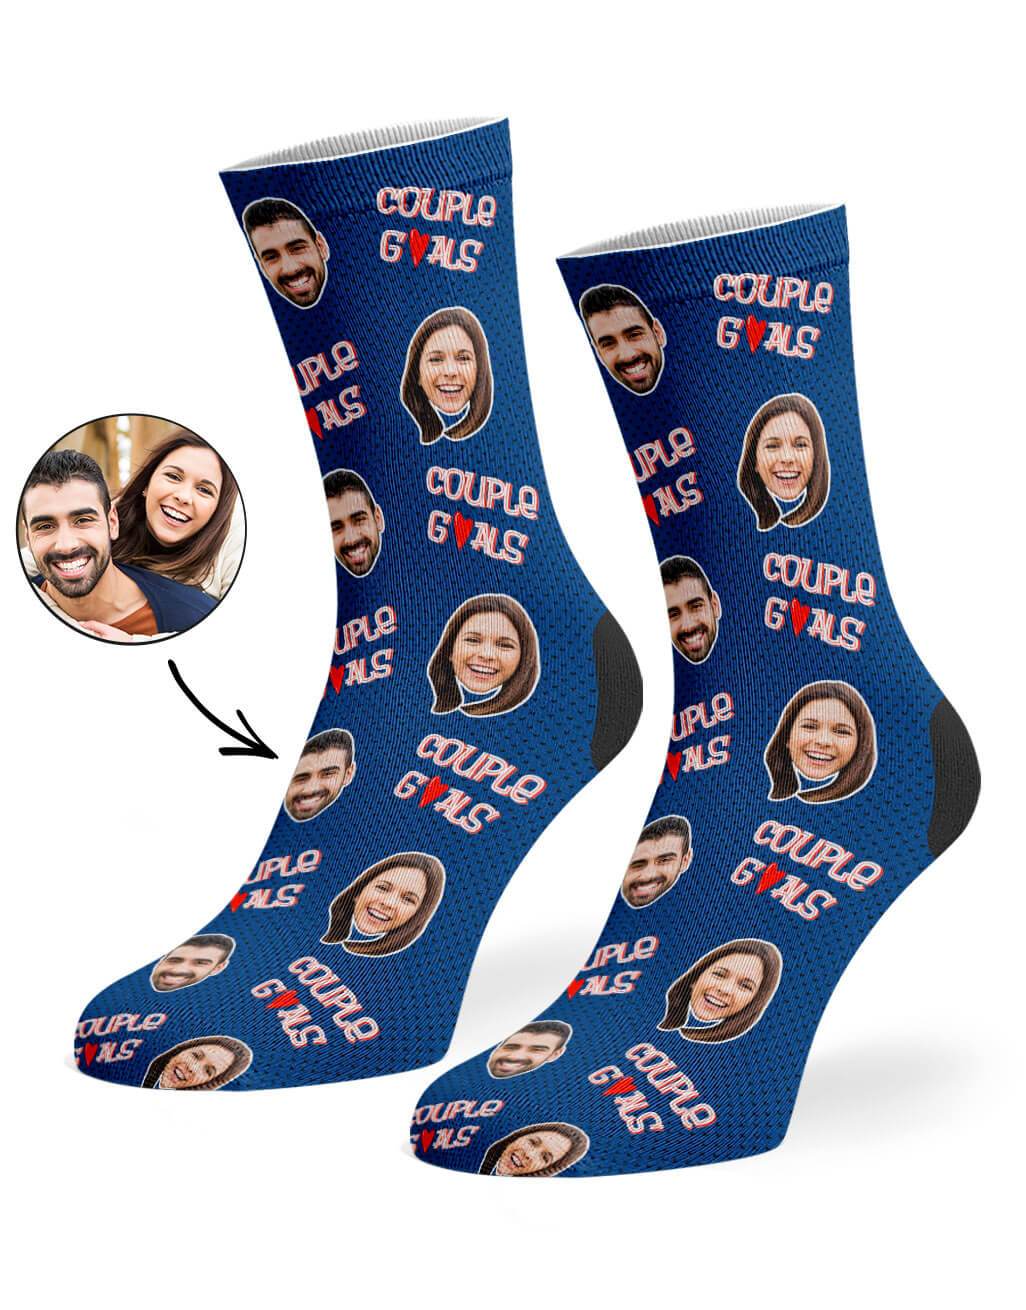 Couple Goals Custom Socks